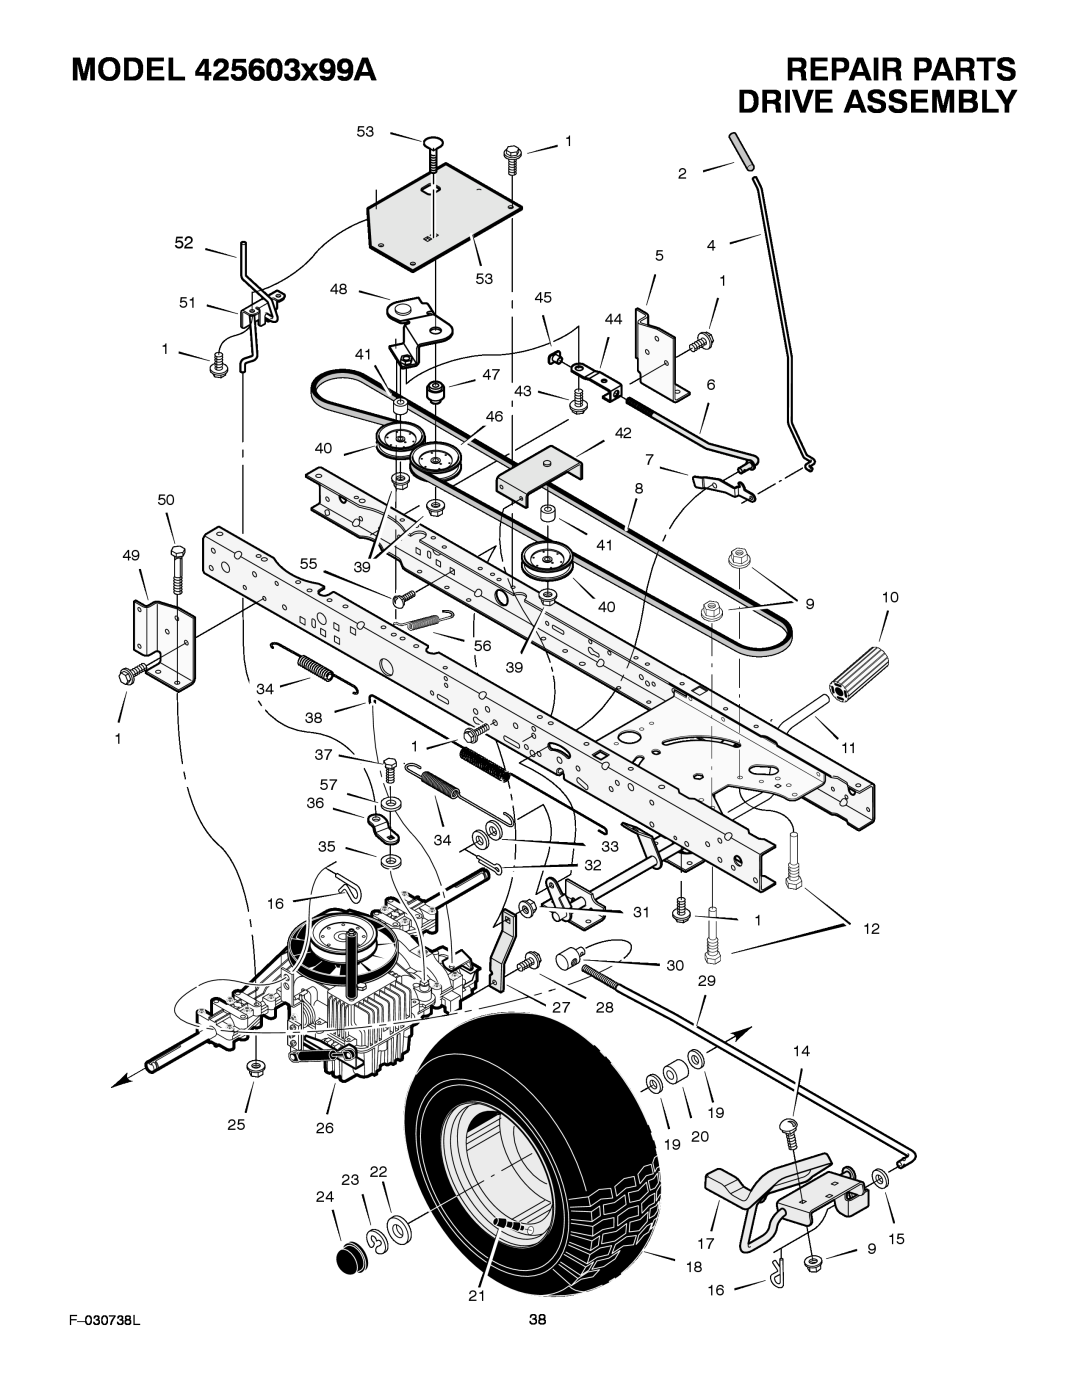 Murray manual Drive Assembly, MODEL 425603x99A, Repair Parts 